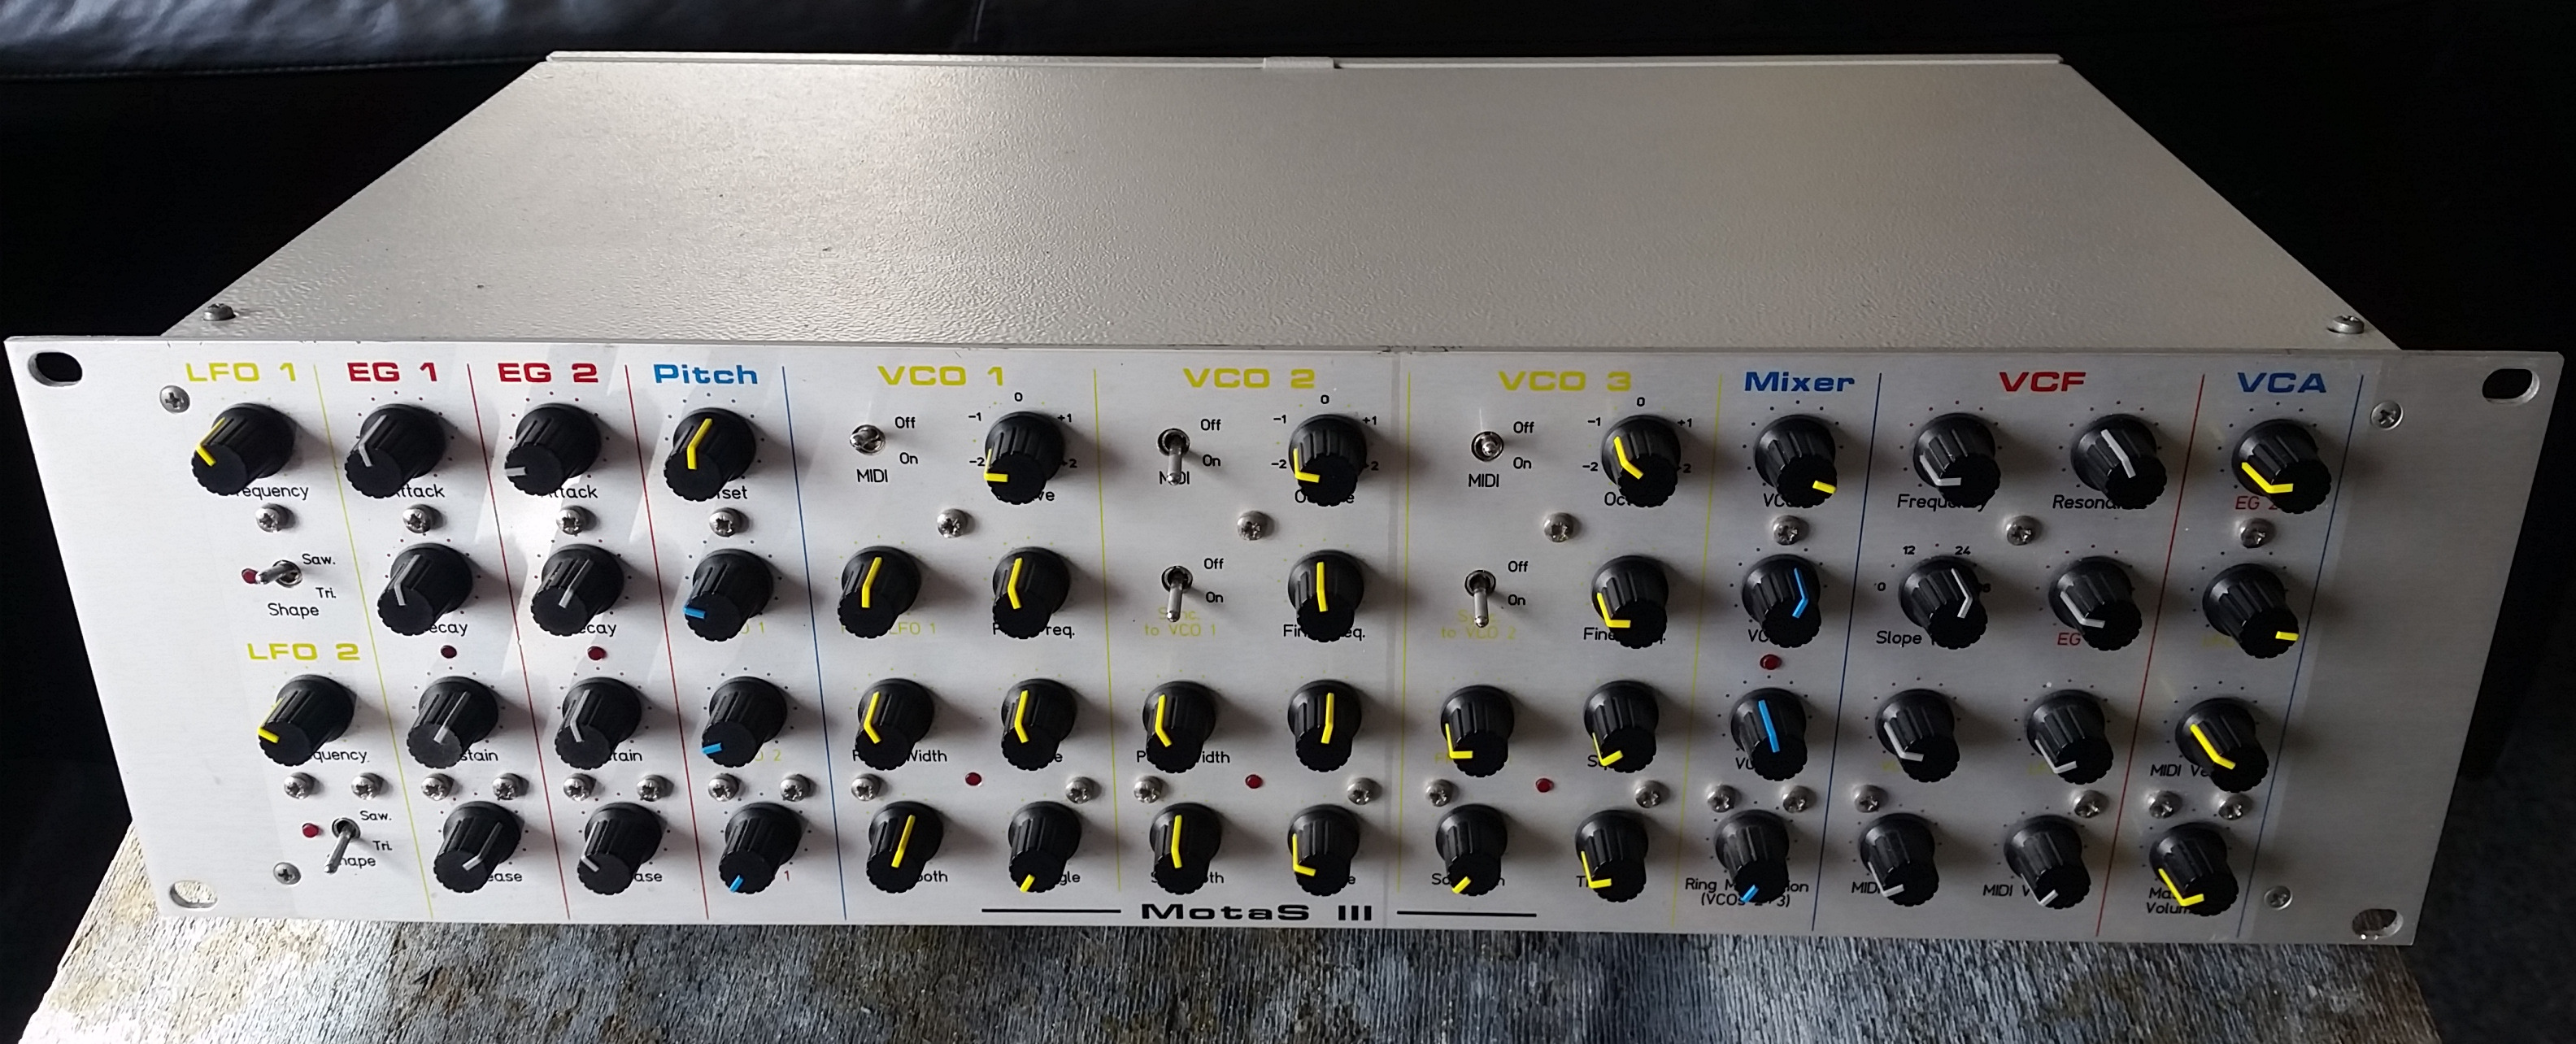 Motas3 analogue synthesizer (created circa 2001)